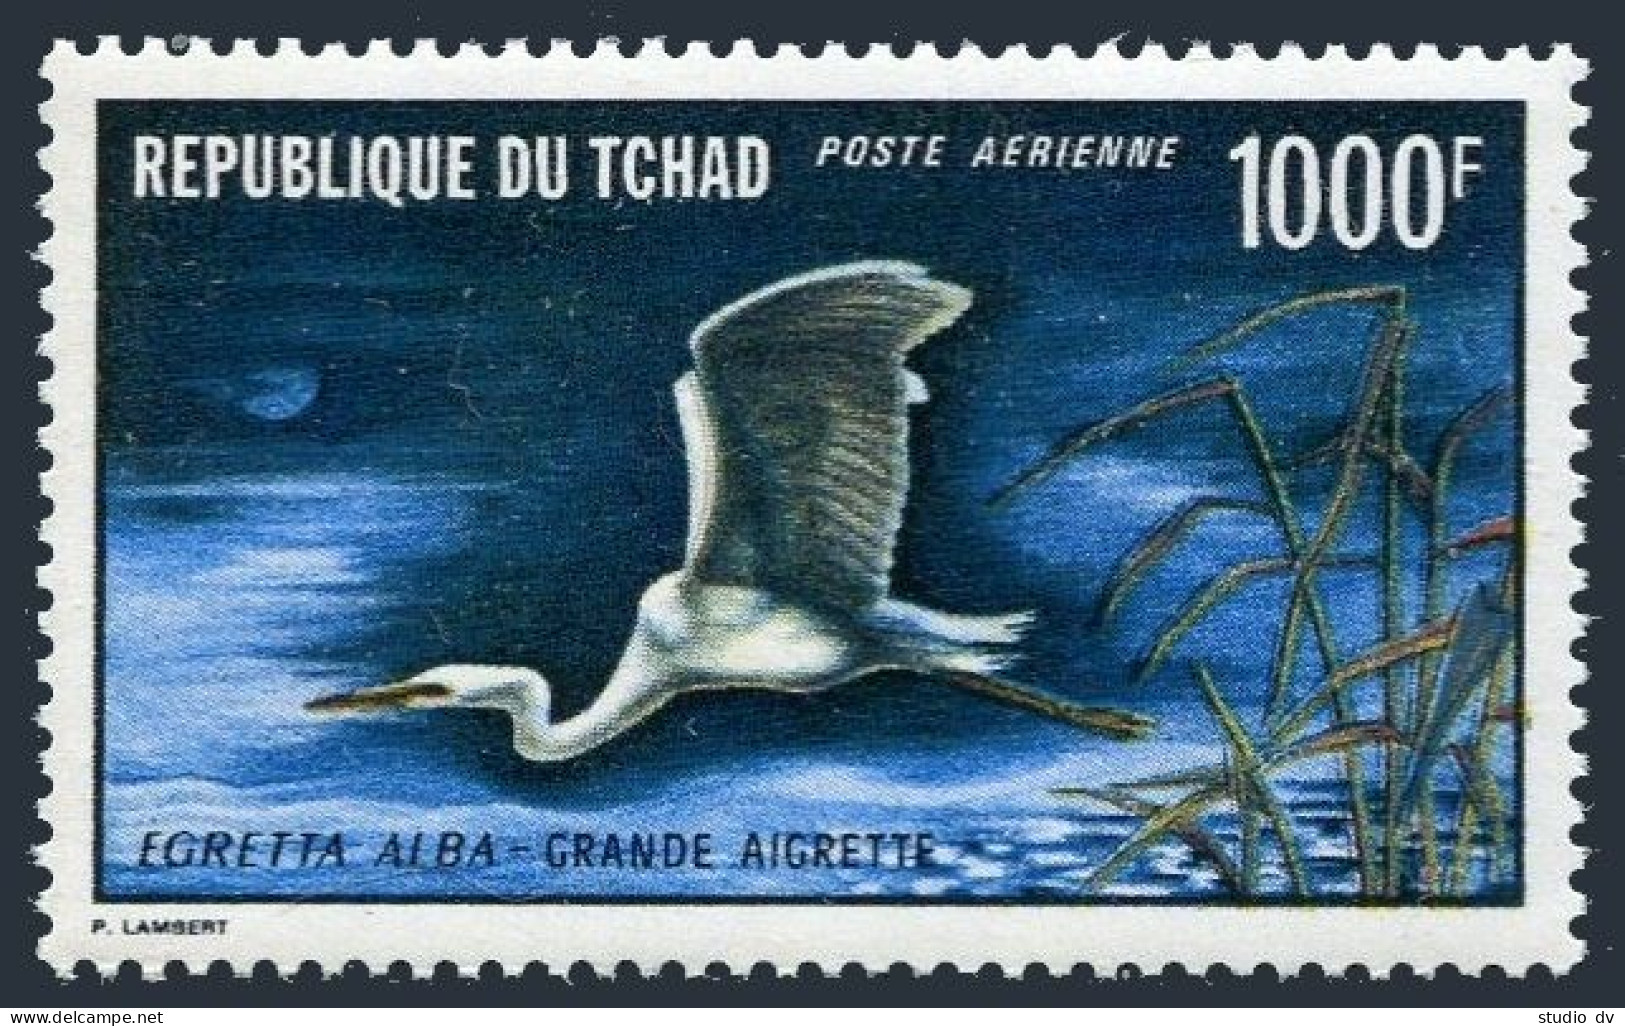 Chad C84, MNH. Michel 399A. White Egret In Flight, 1971. - Tschad (1960-...)